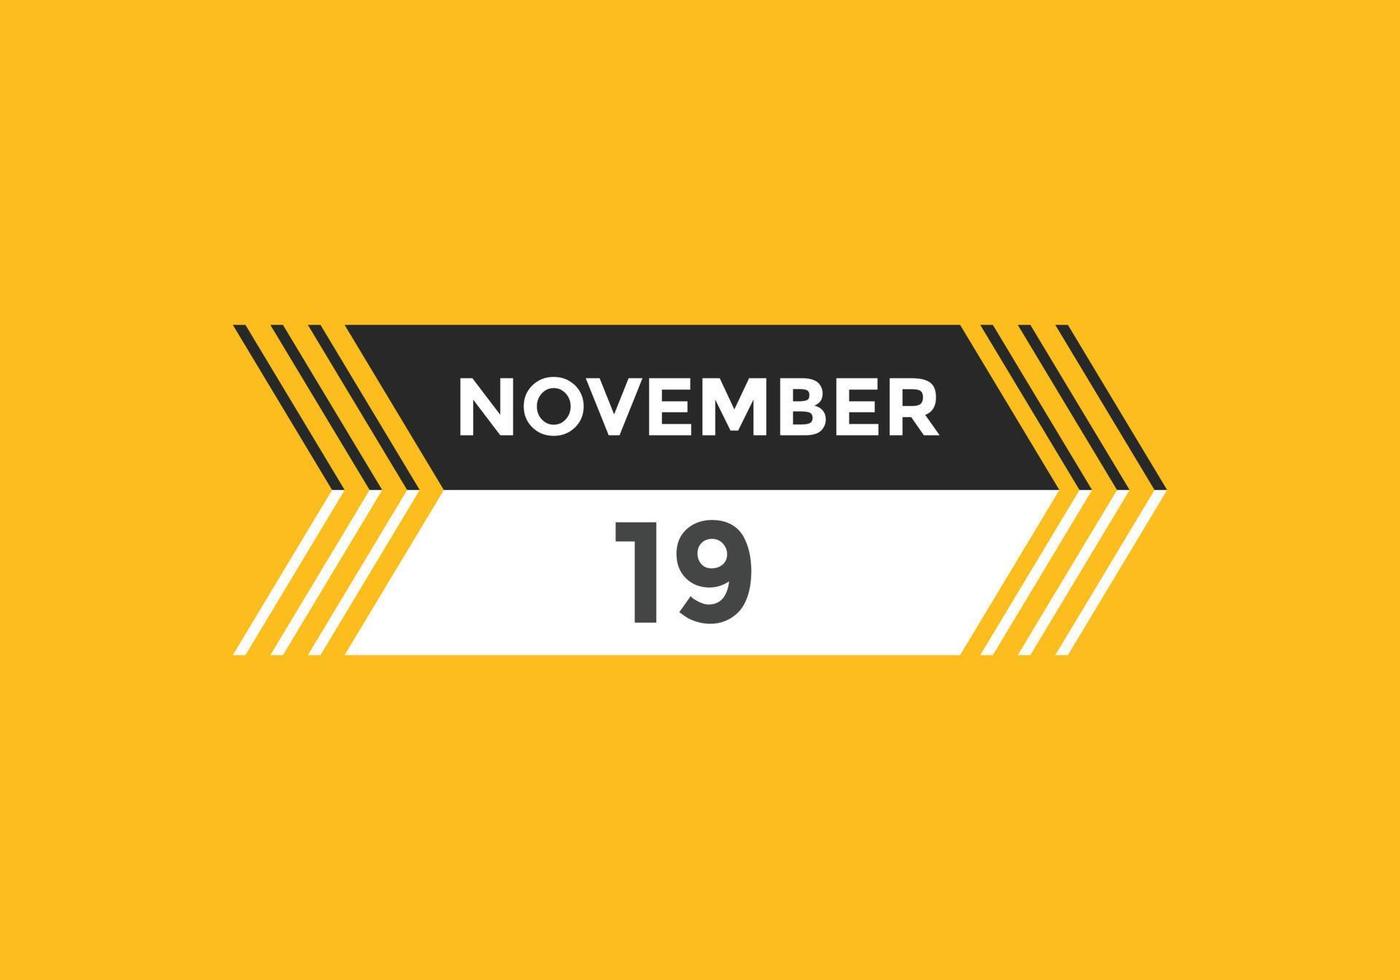 19. November Kalendererinnerung. 19. november tägliche kalendersymbolvorlage. Kalender 19. November Icon-Design-Vorlage. Vektor-Illustration vektor